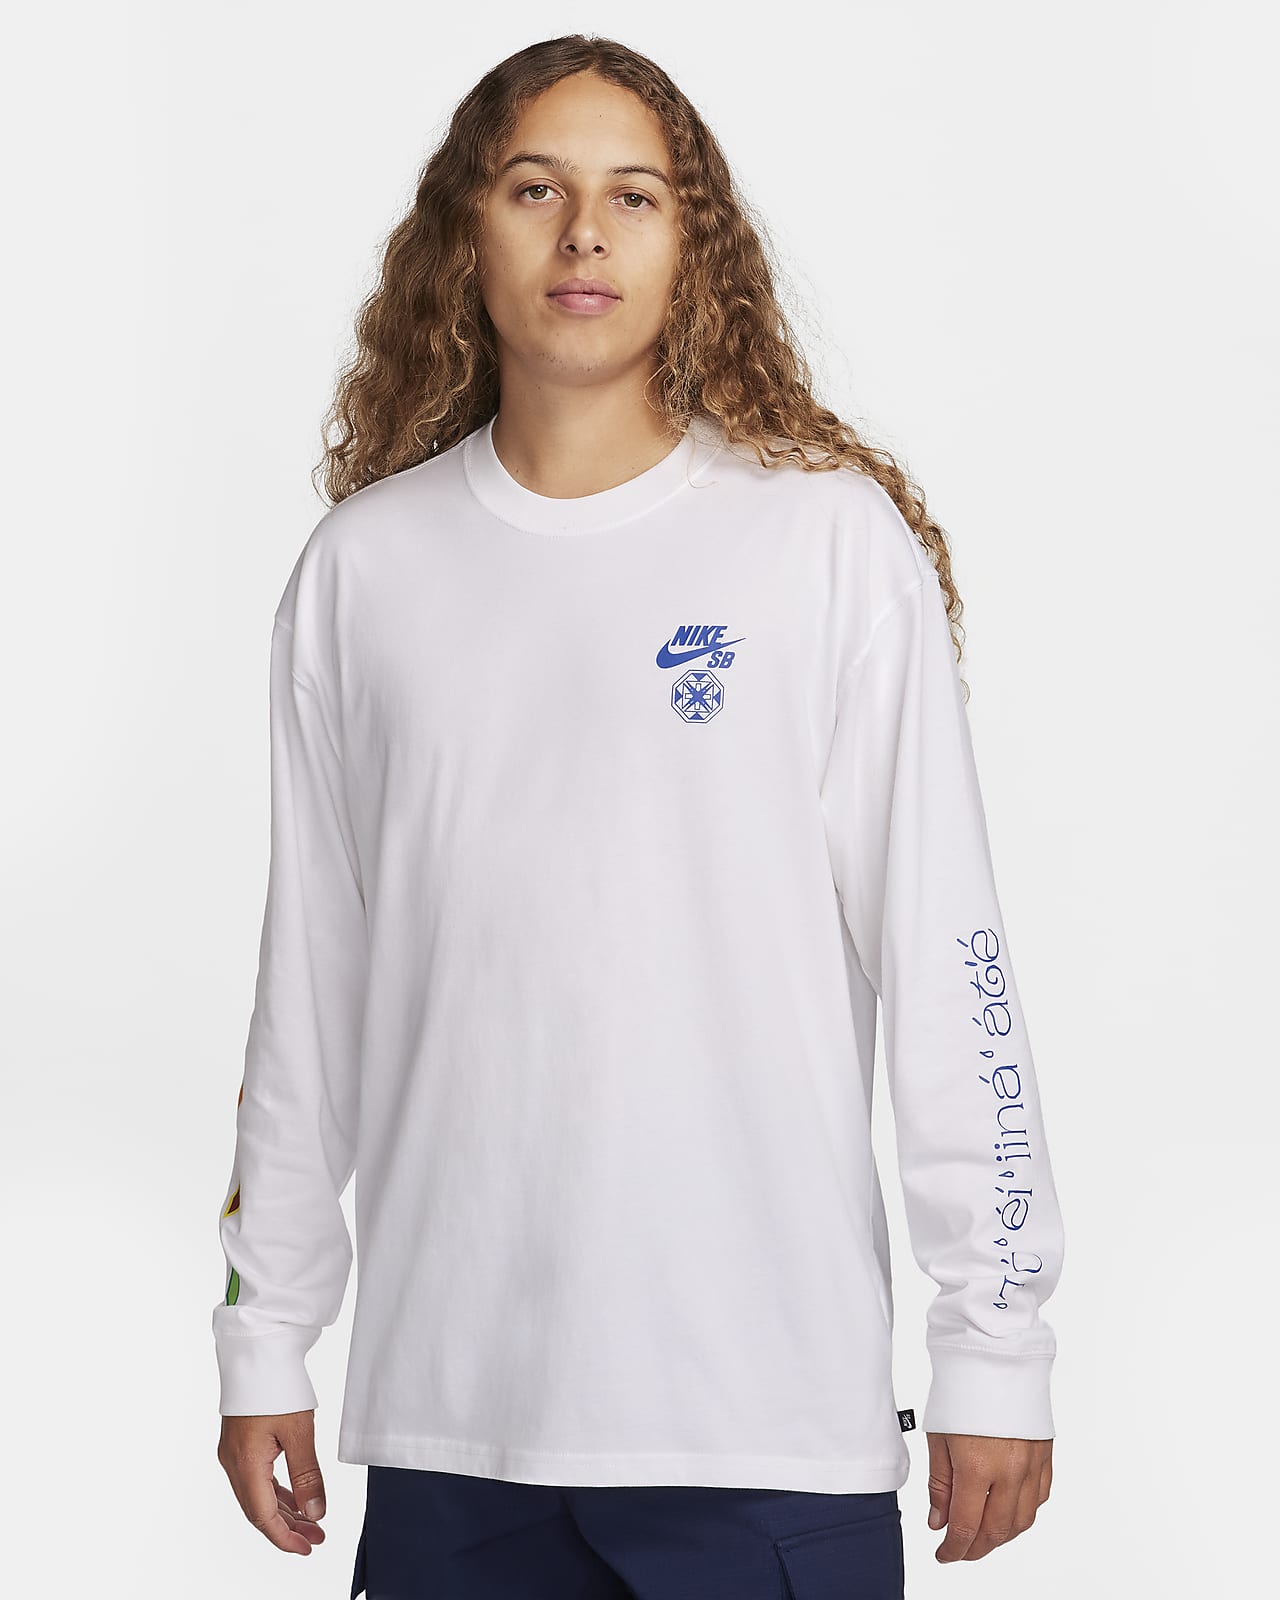 T-shirt de skateboard à manches longues Max90 Nike SB x Di'Orr Greenwood